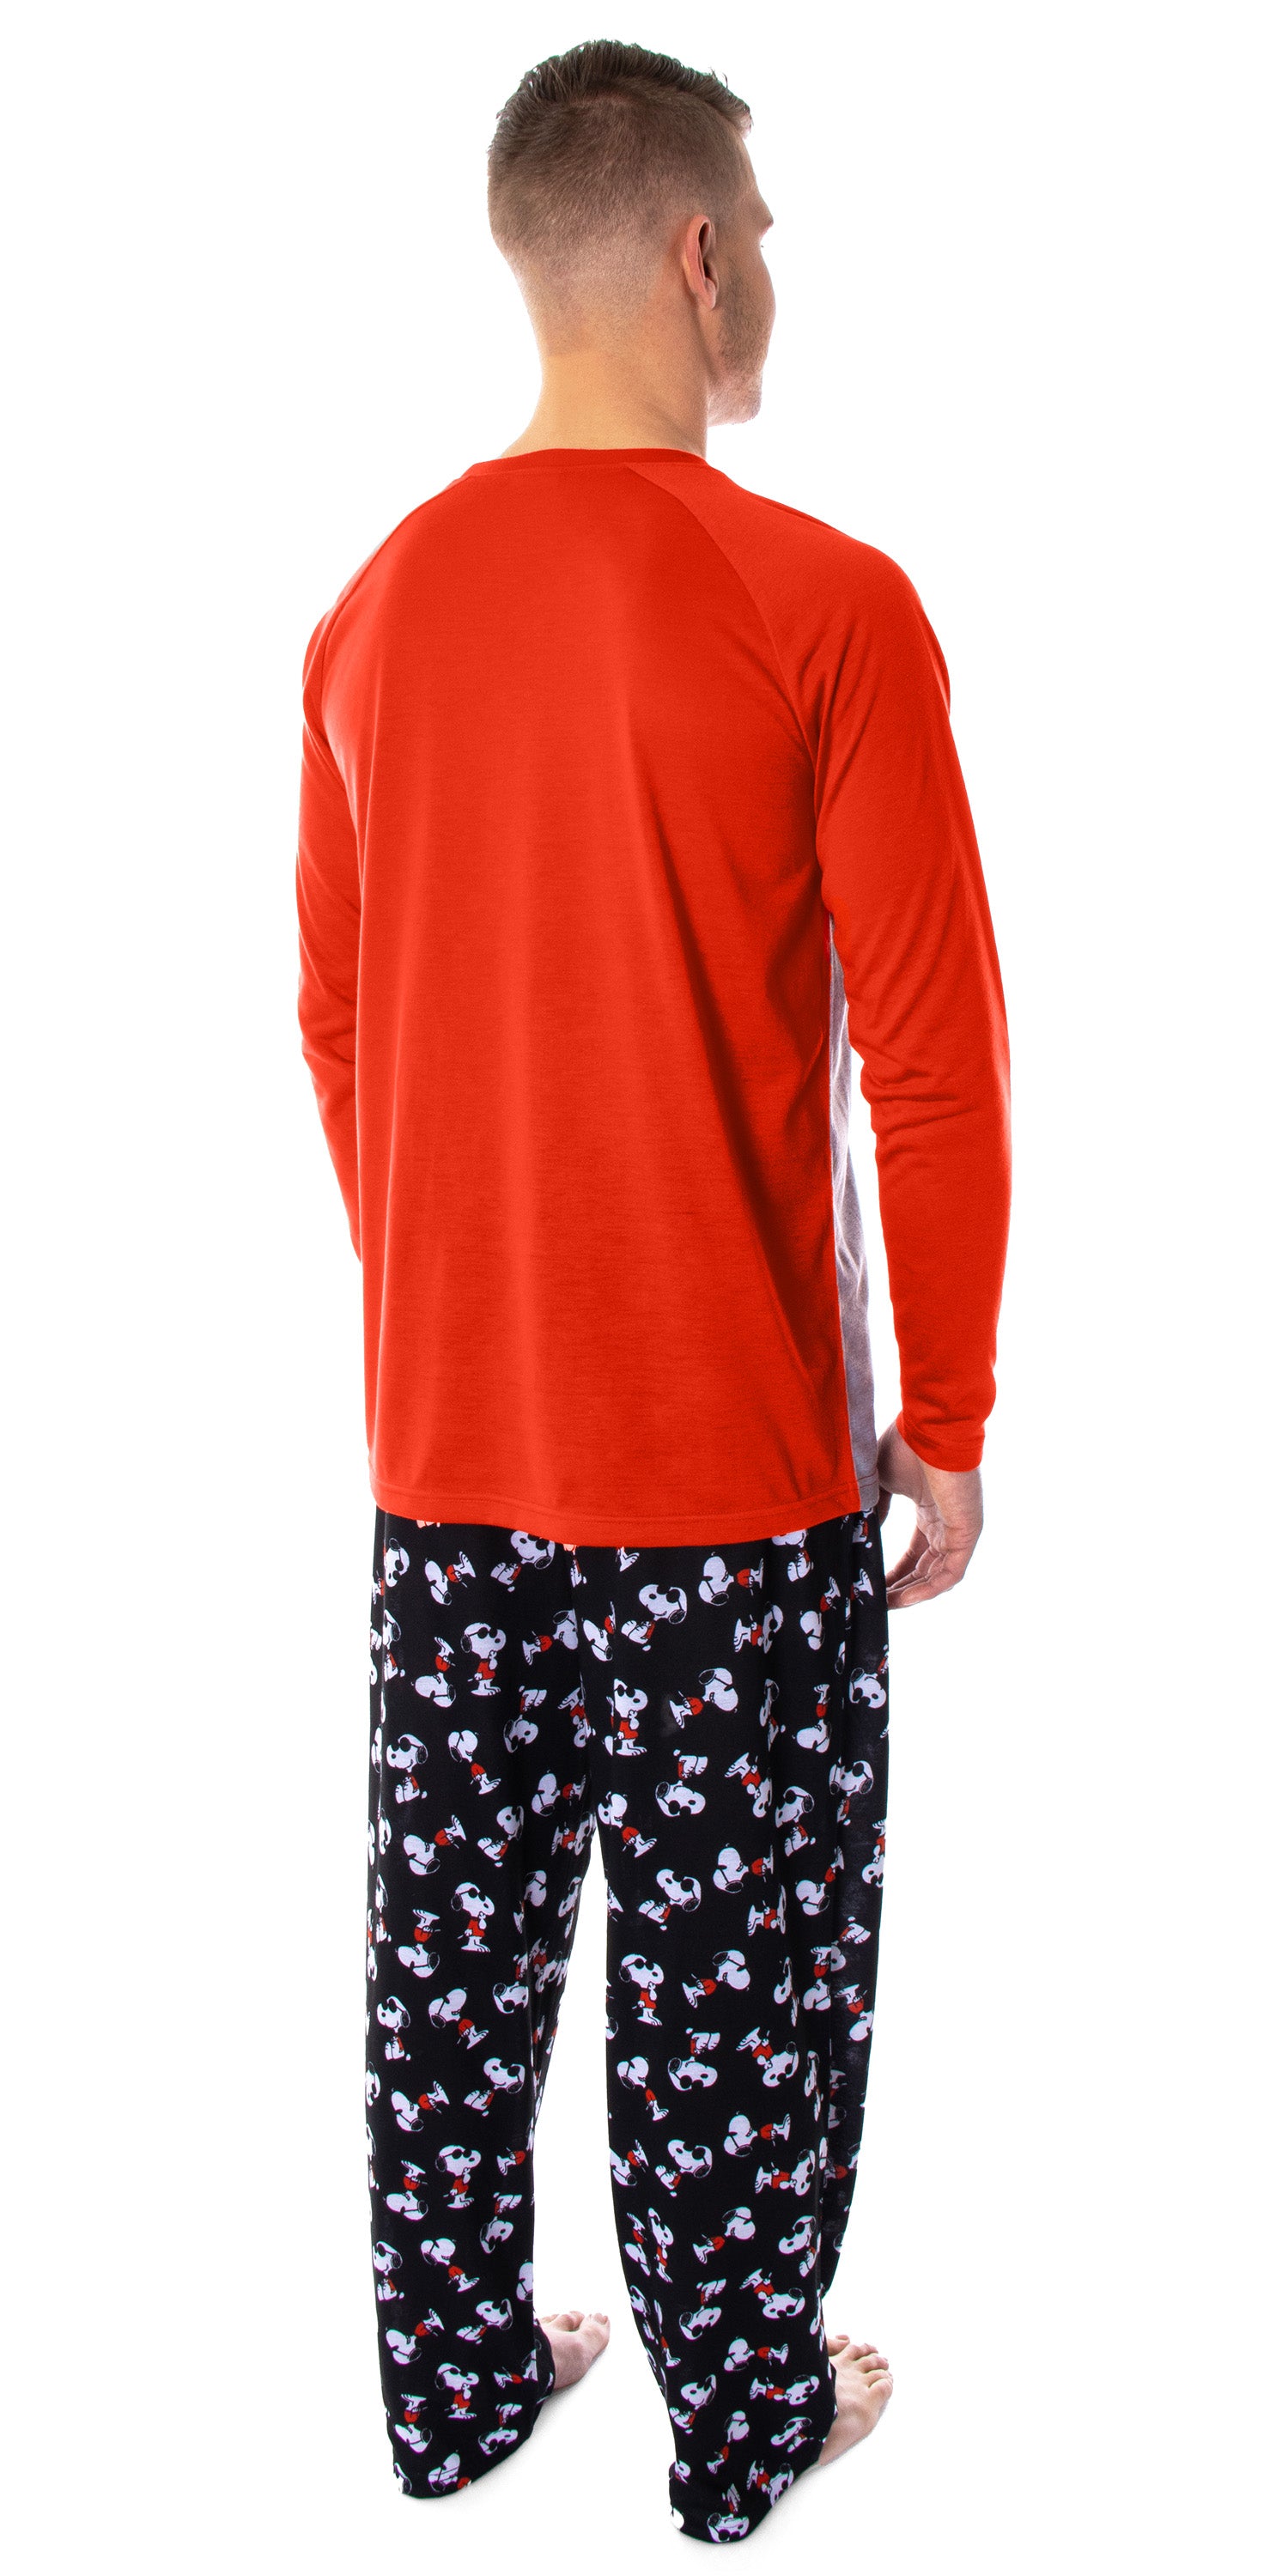 Peanuts Boys' Joe Cool Snoopy Pajamas Short Sleeve Shirt And Shorts 2 Piece  PJs Kids Sleepwear Set (SM, 6/7) : : Clothing, Shoes & Accessories